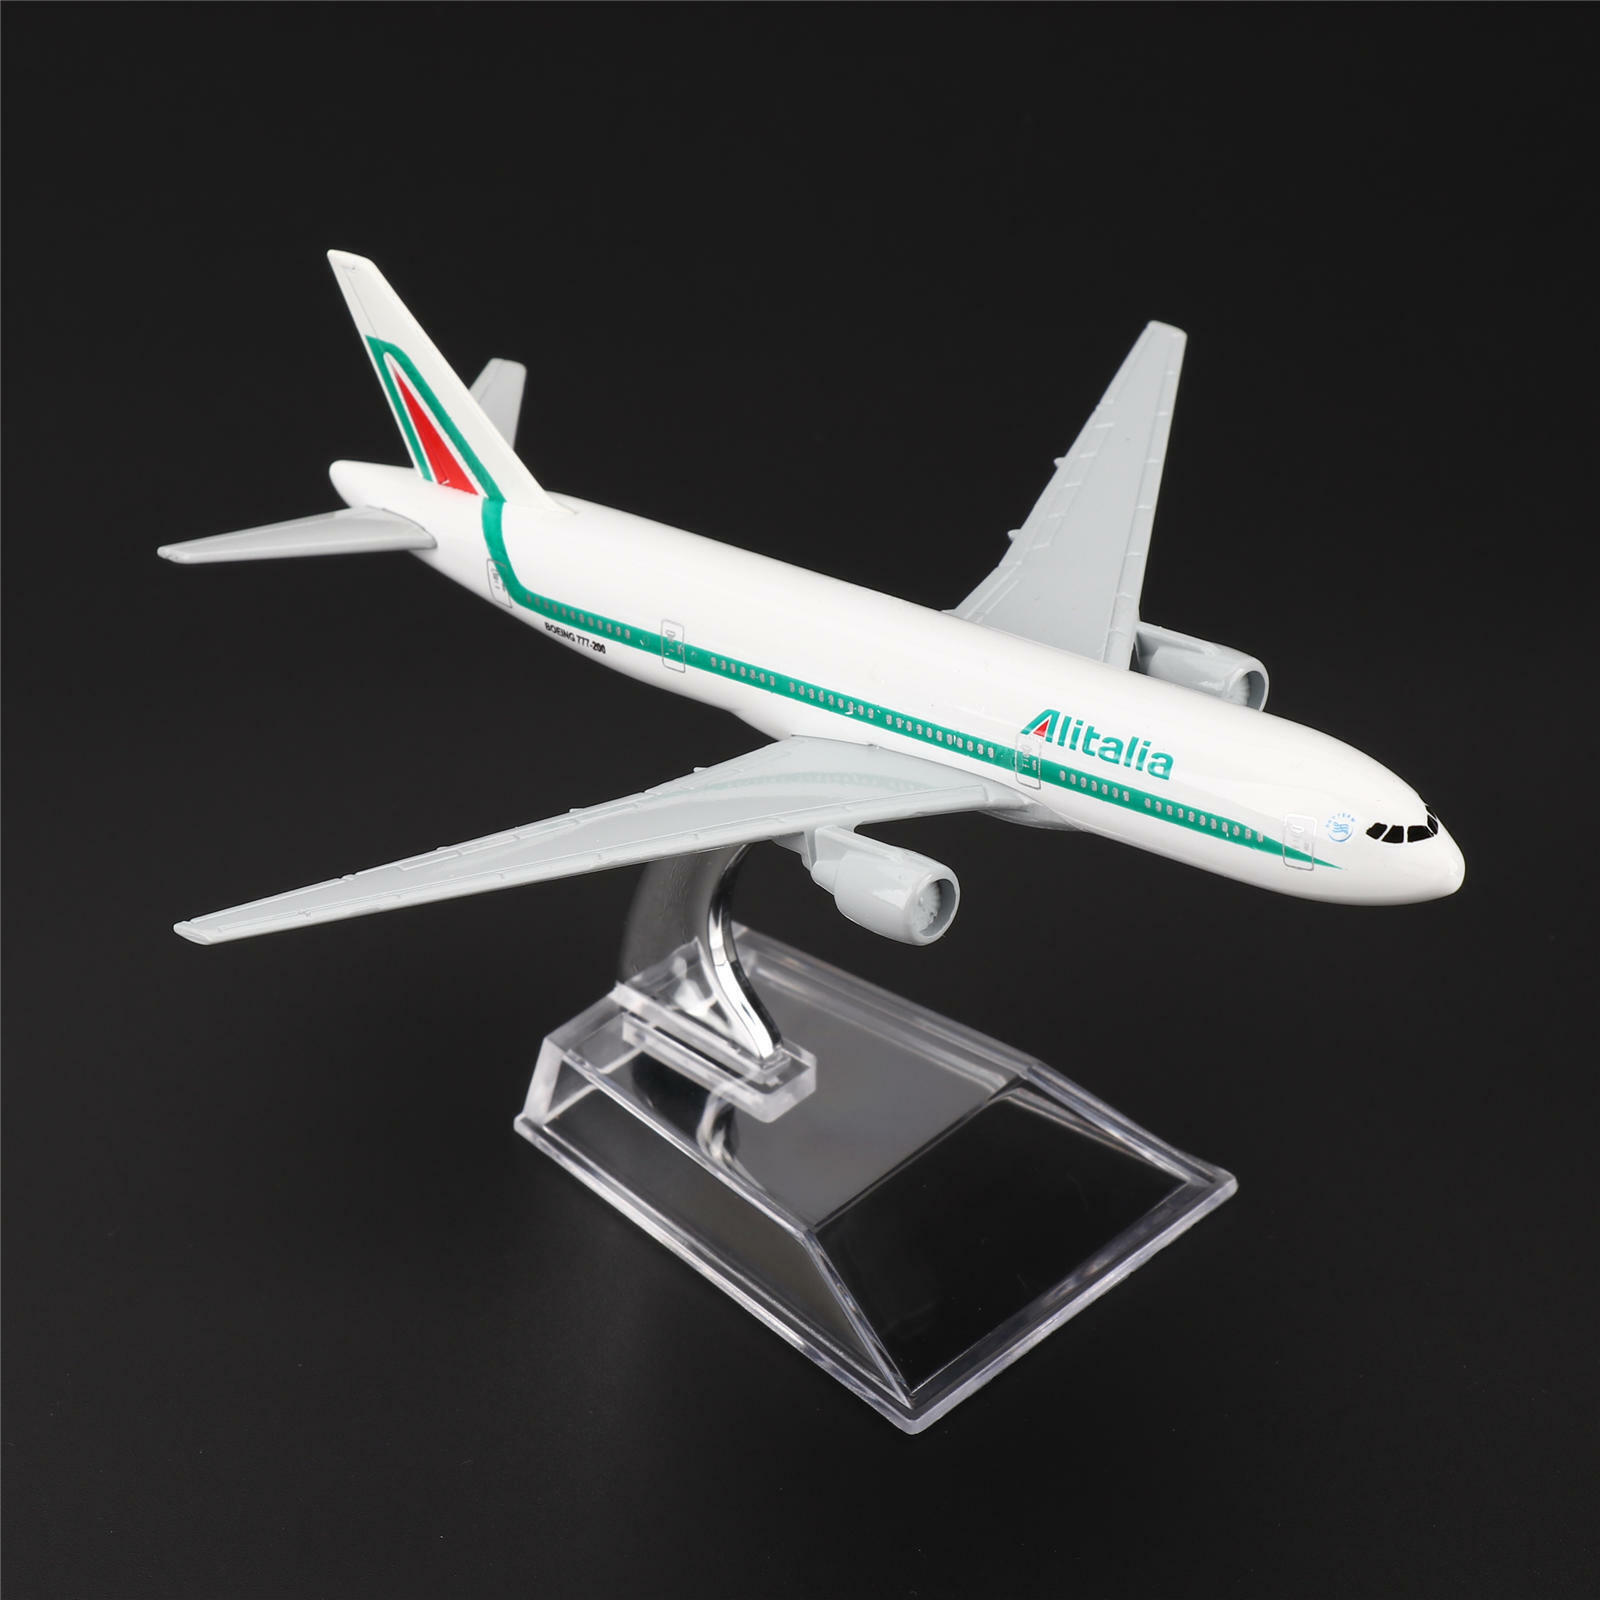 16cm Aircraft Plane Boeing 777 Alitalia Airlines Aircraft Diecast Model